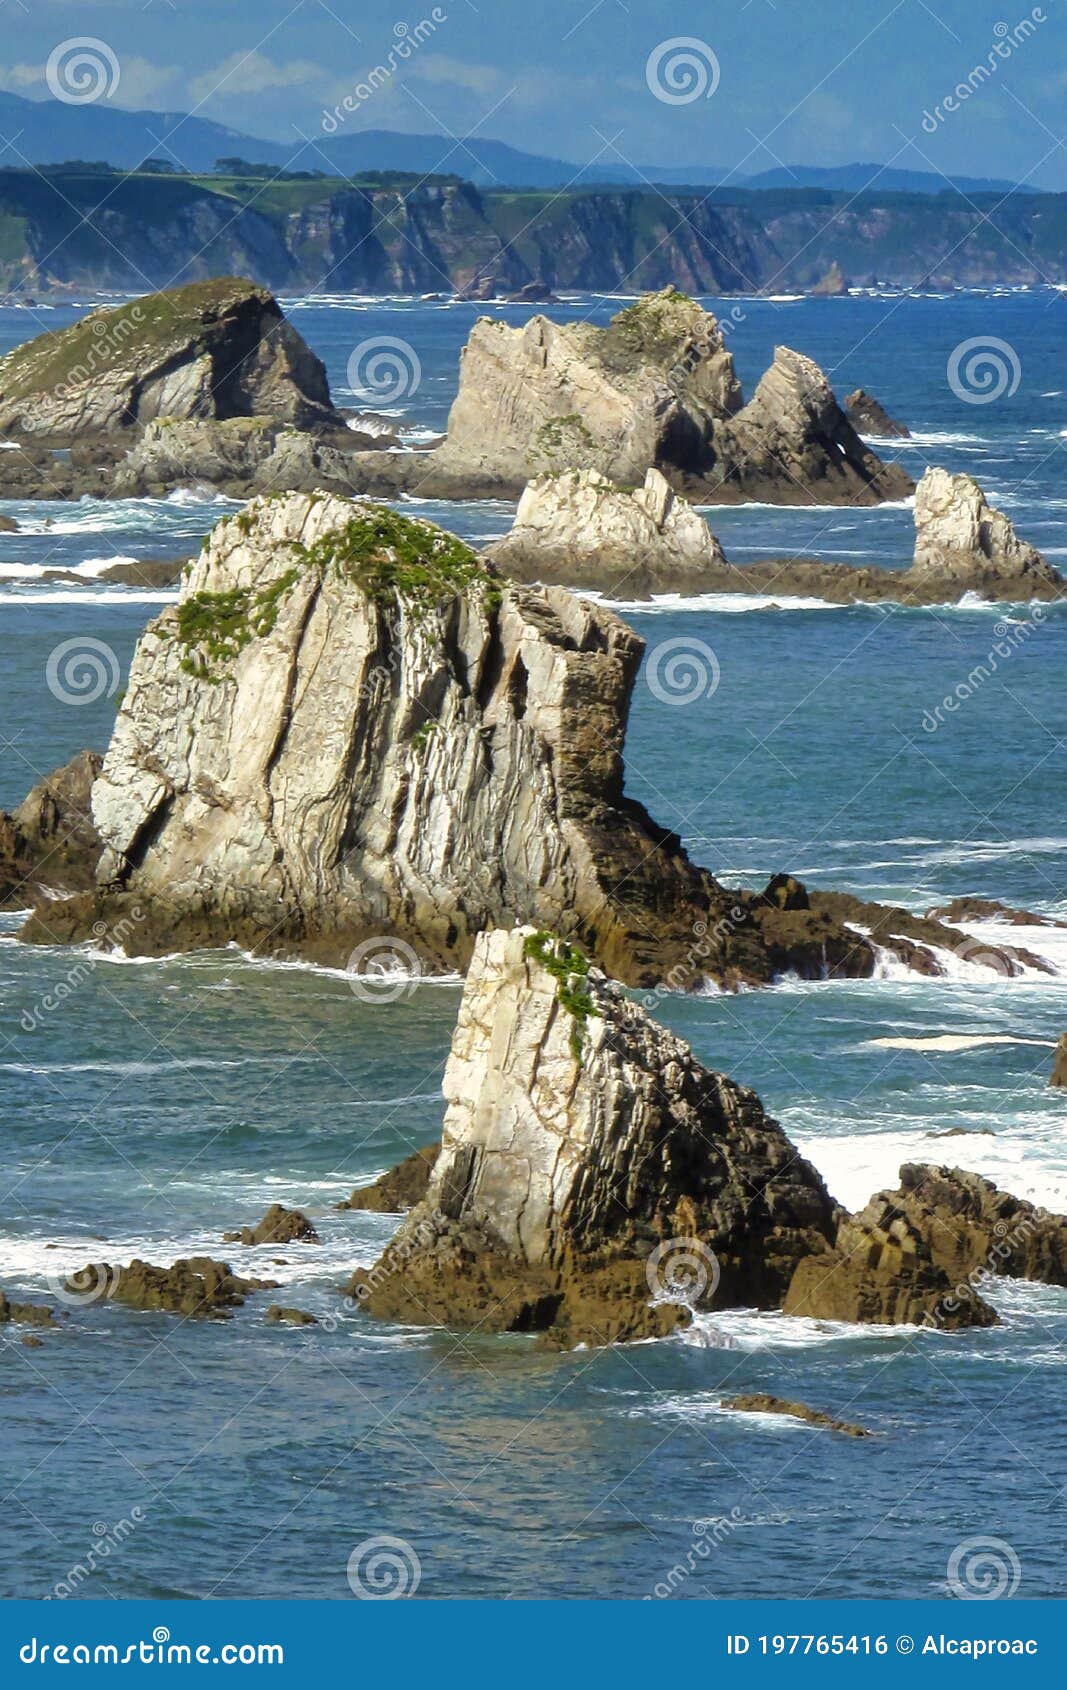 cantabric sea clifs near the silent beach, spain